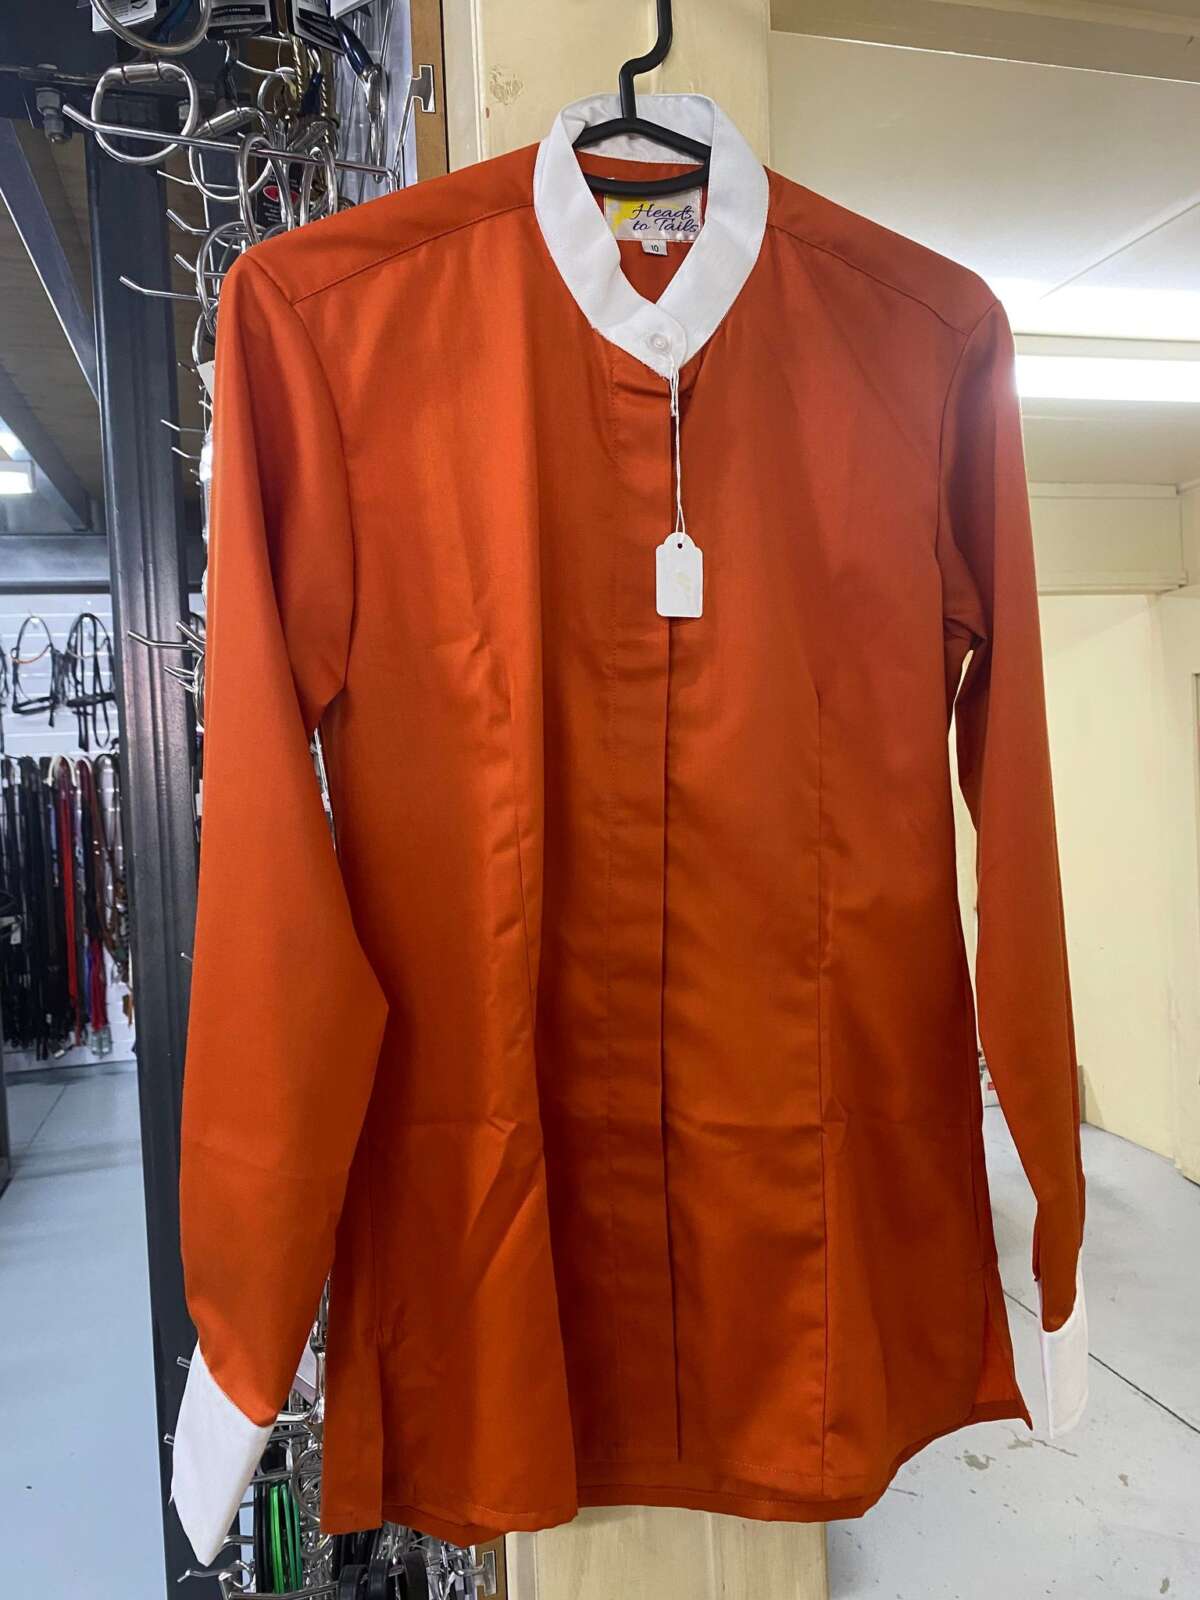 Ladies Orange Show Shirt – Size 10